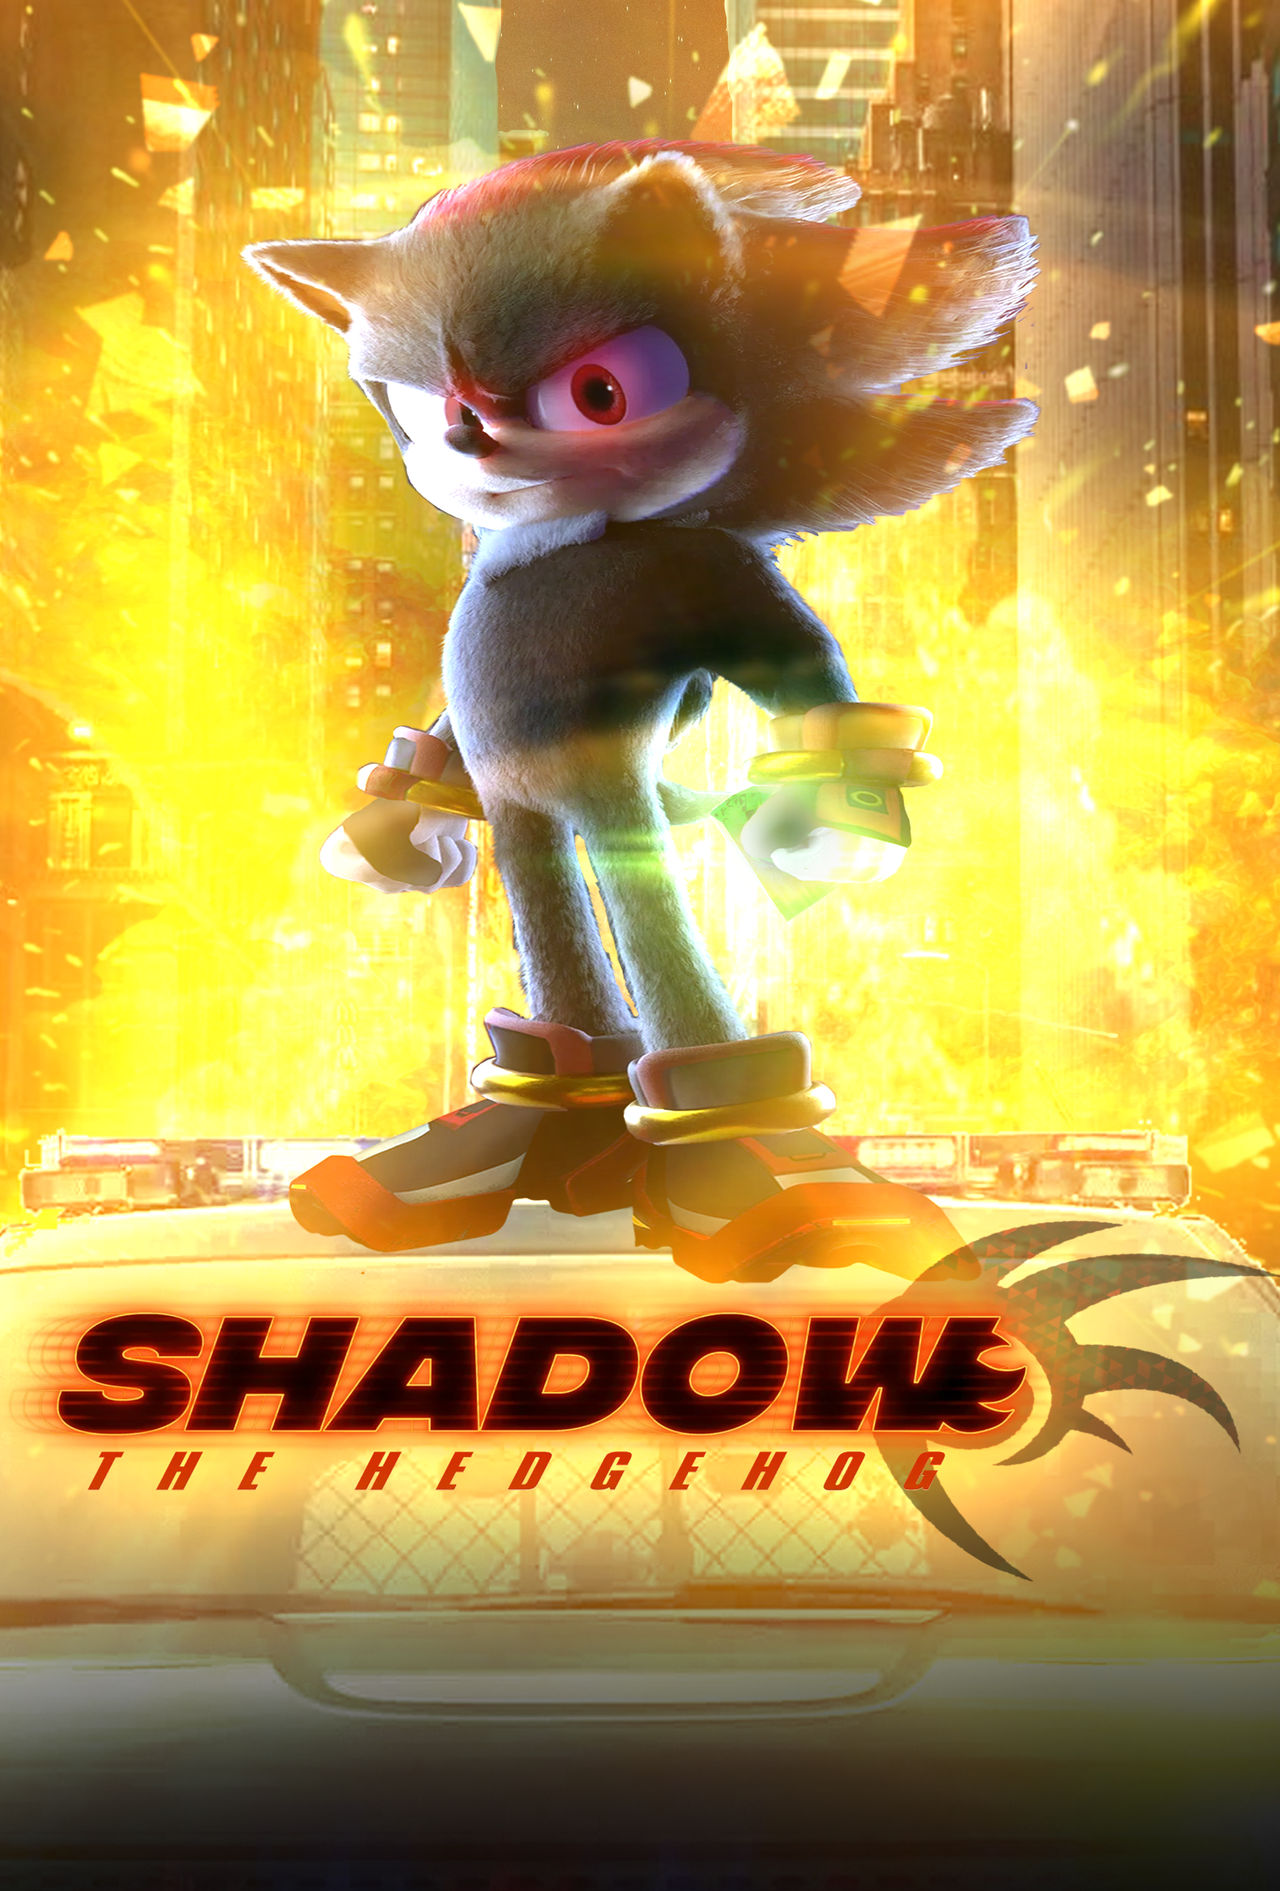 Shadow the hedgehog game ,Movie edit by DanielVieiraBr2020 on DeviantArt